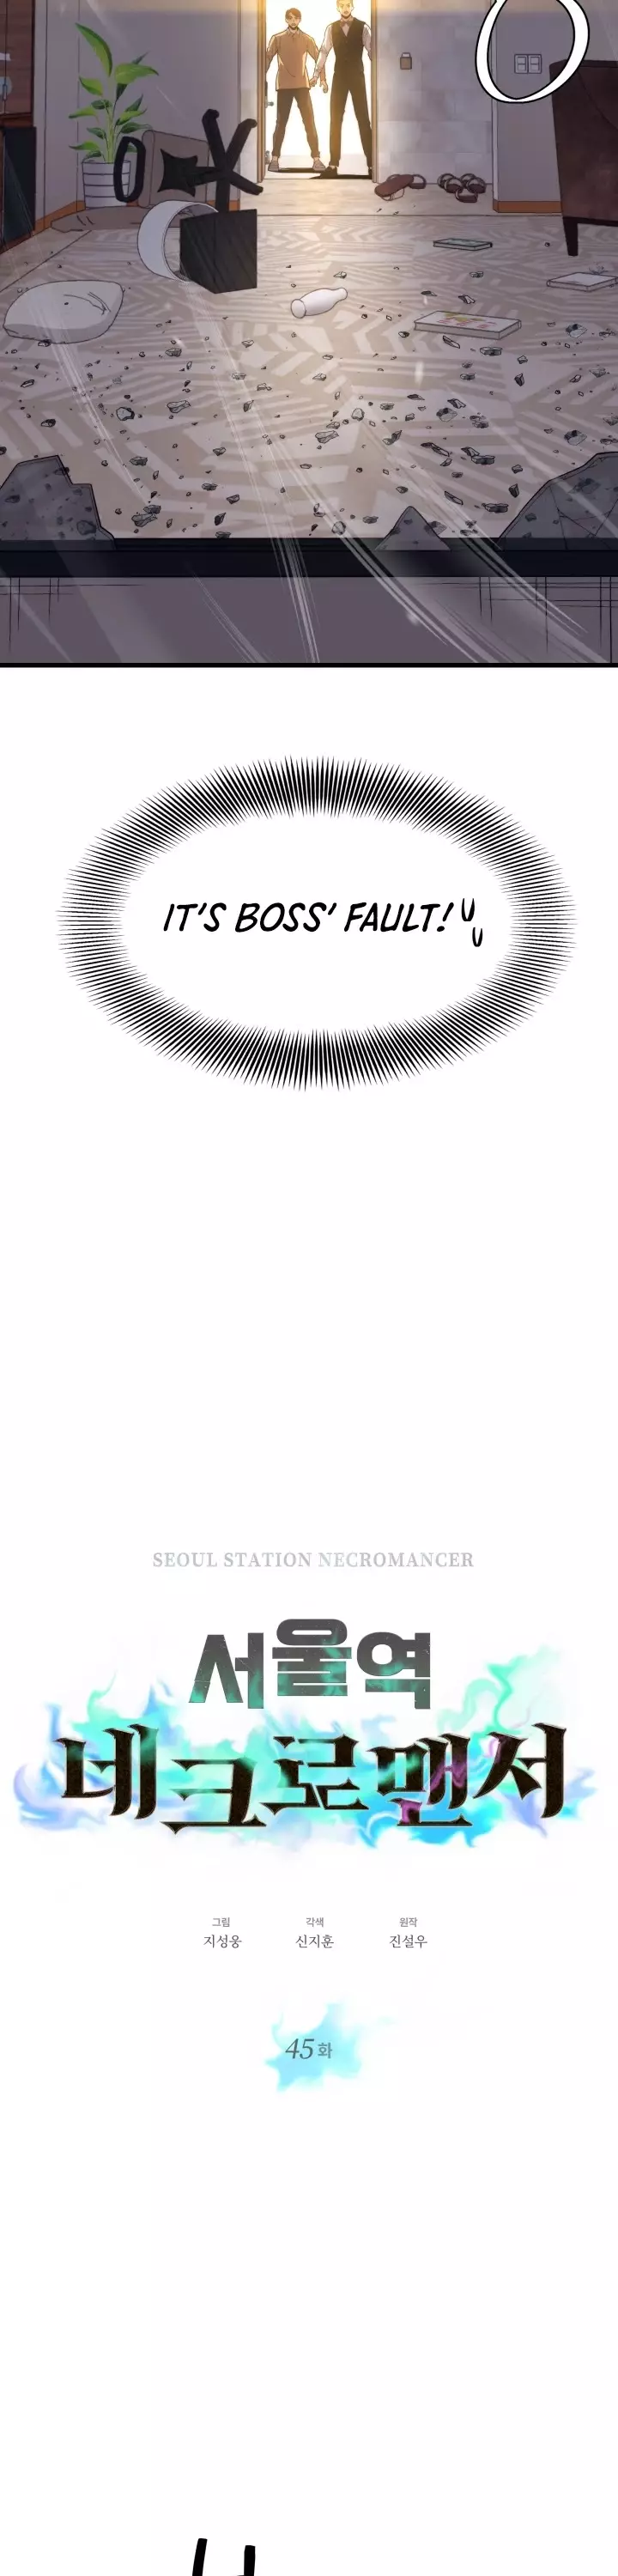 Seoul Station's Necromancer - 45 page 8-109fc4e8